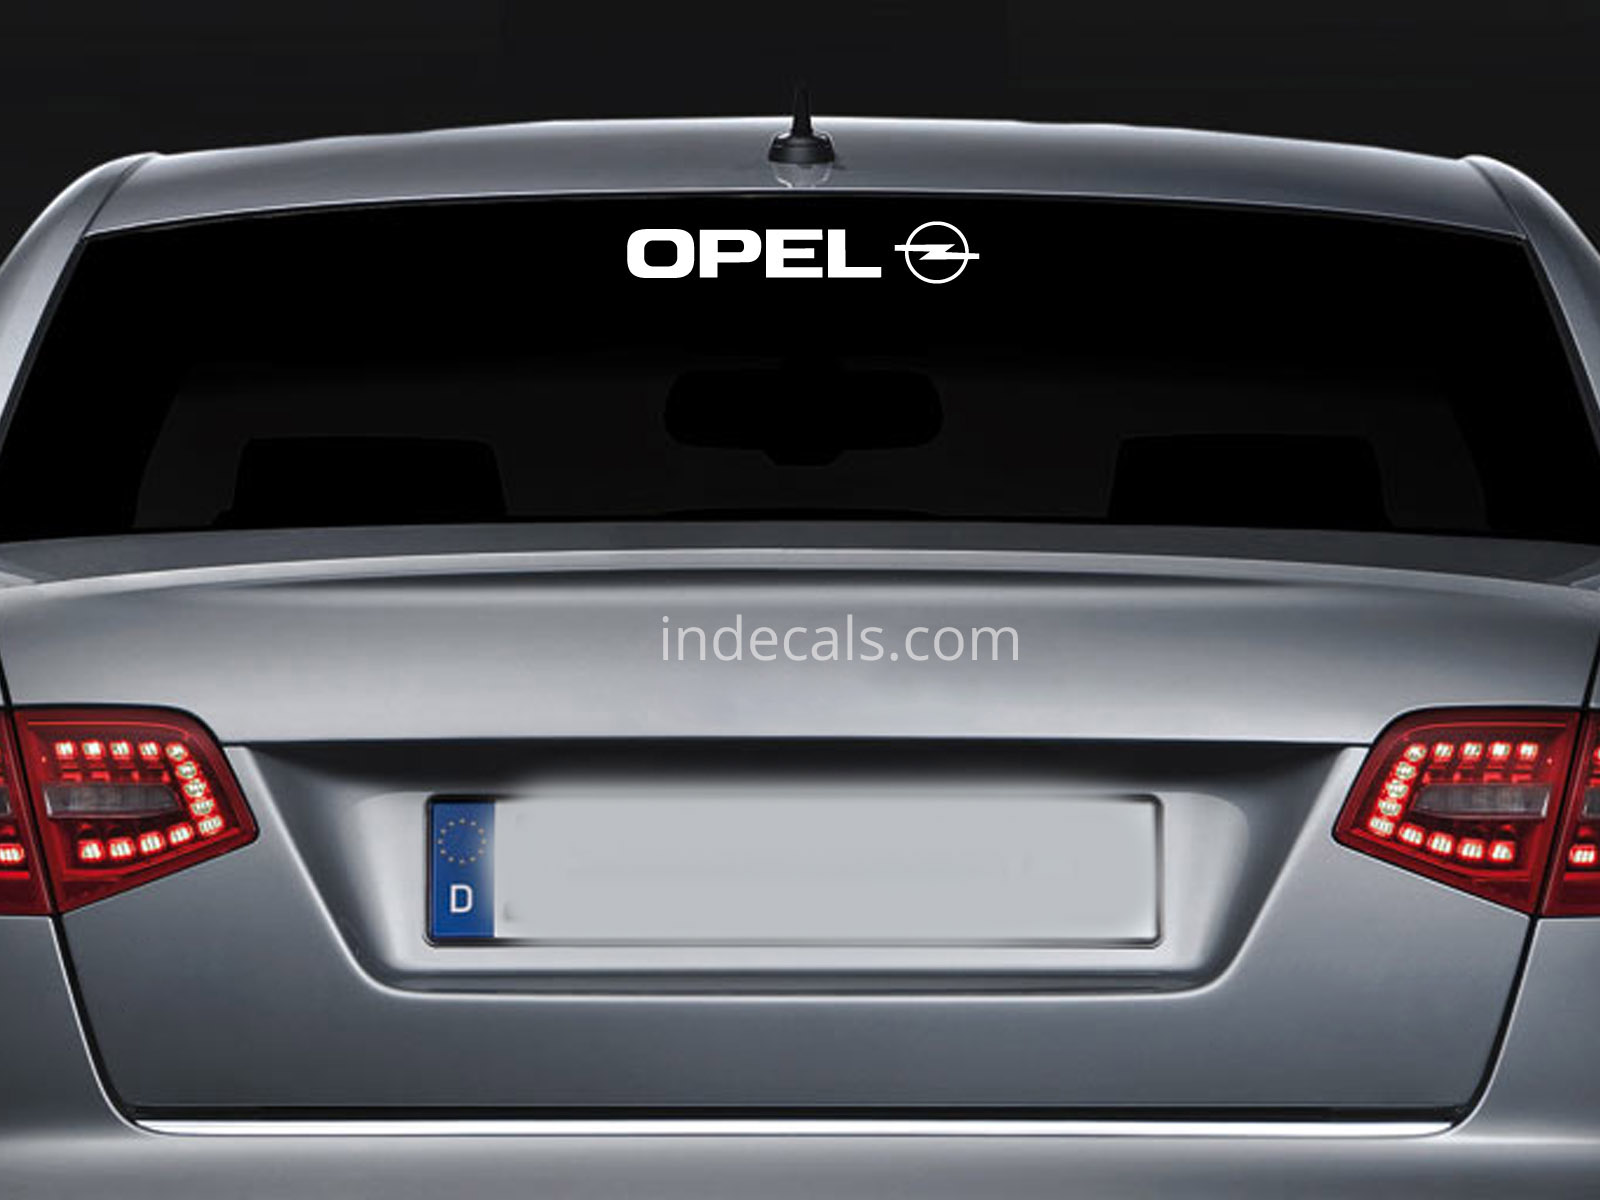 1 x Opel Sticker for Windshield or Back Window - White